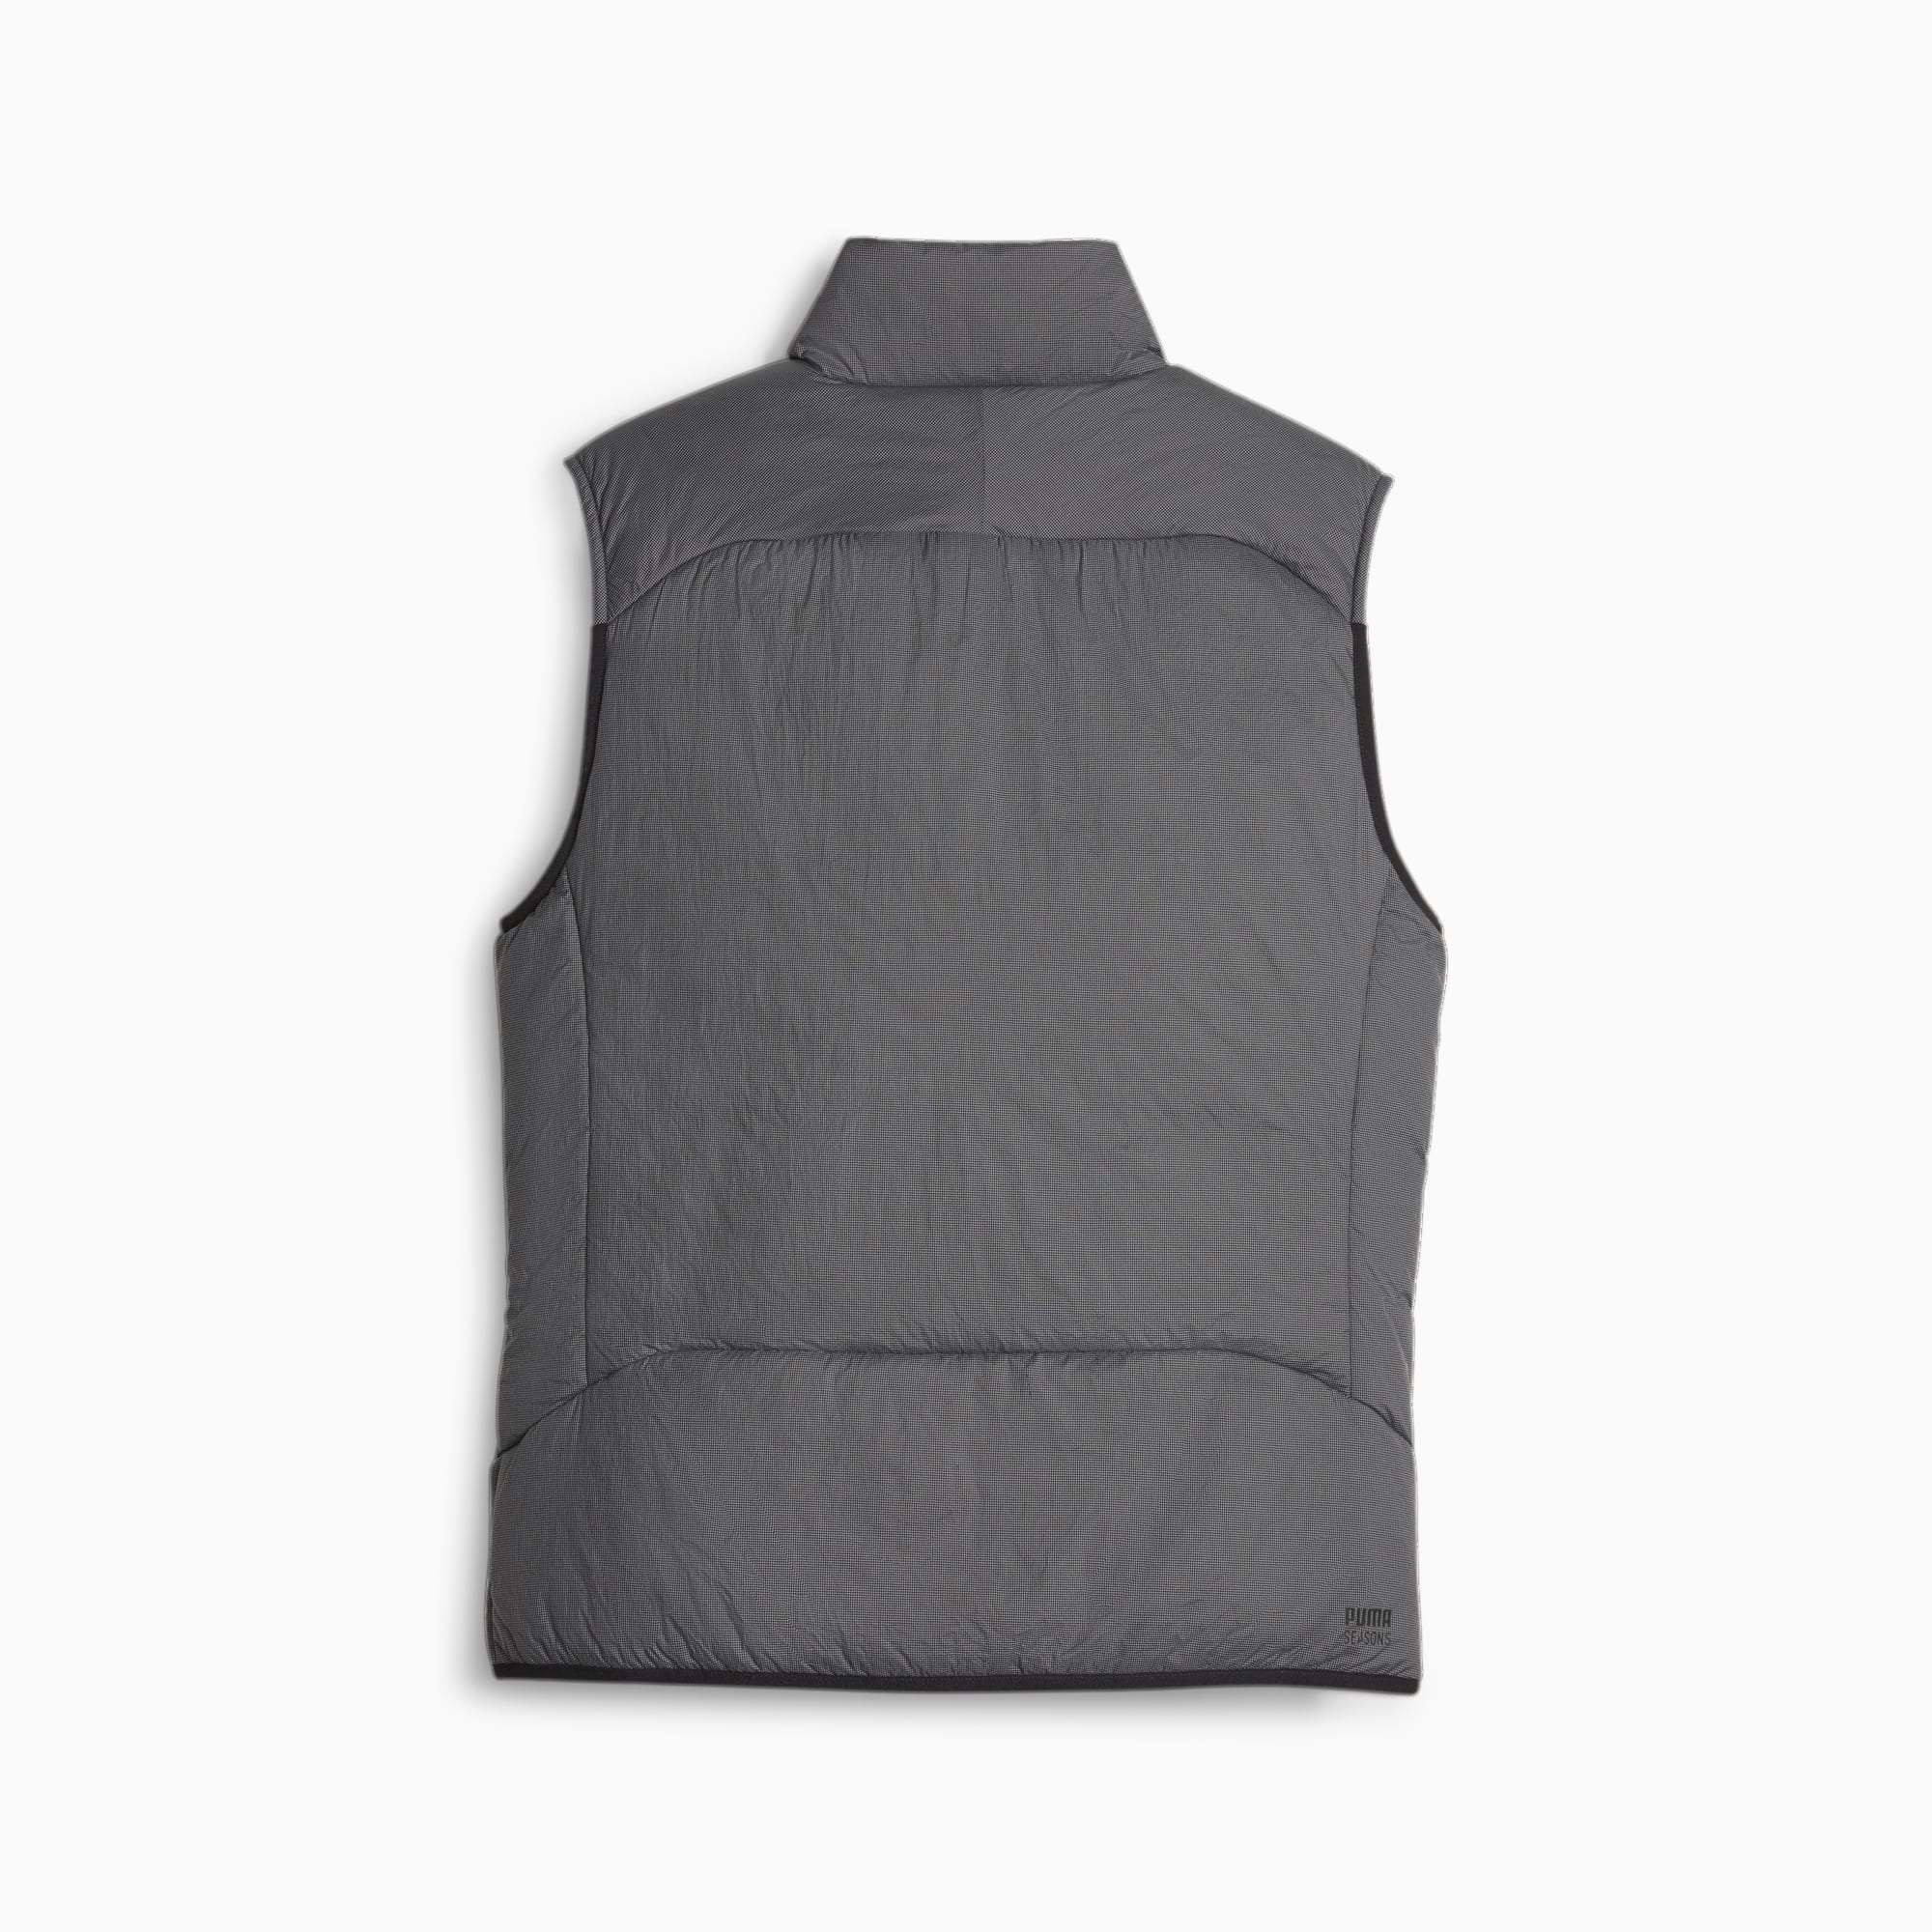 PUMA Seasons Primaloft Running Vest Men's Jacket, Black, Size S, Clothing